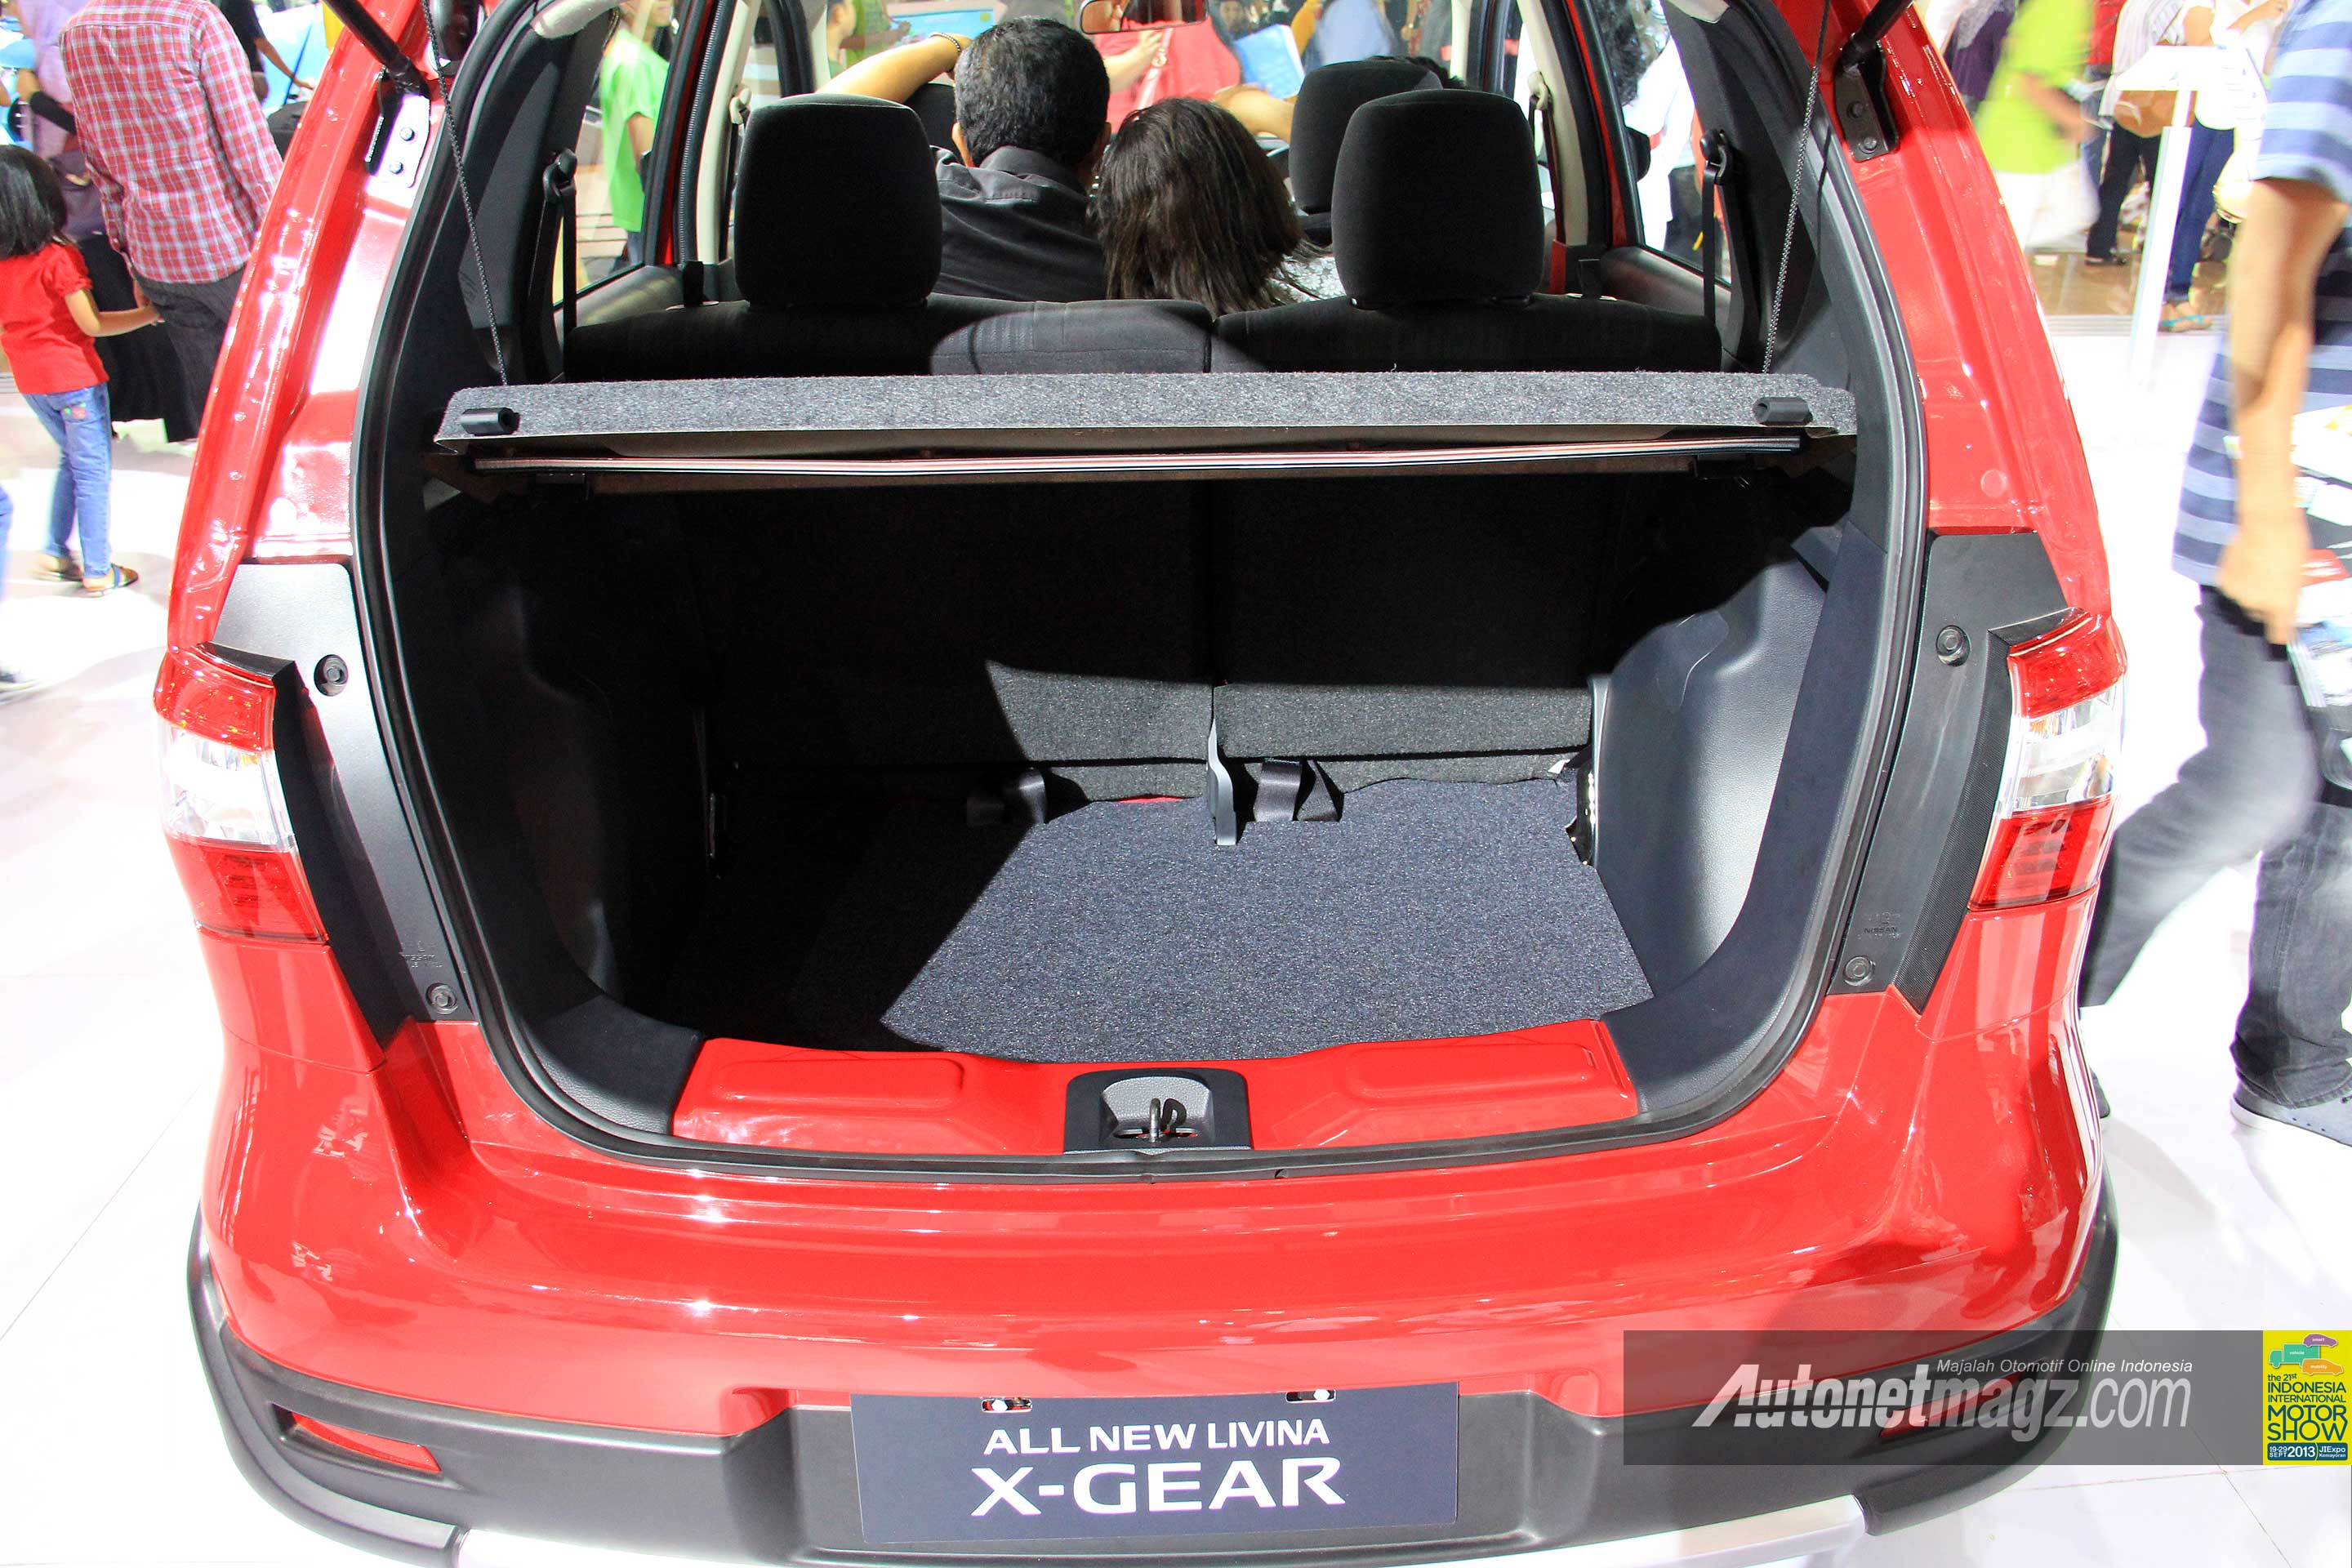 IIMS 2013, Bagasi Nissan All-new Livina X-Gear luas: Kembalinya Nissan Livina X-Gear Facelift di IIMS 2013